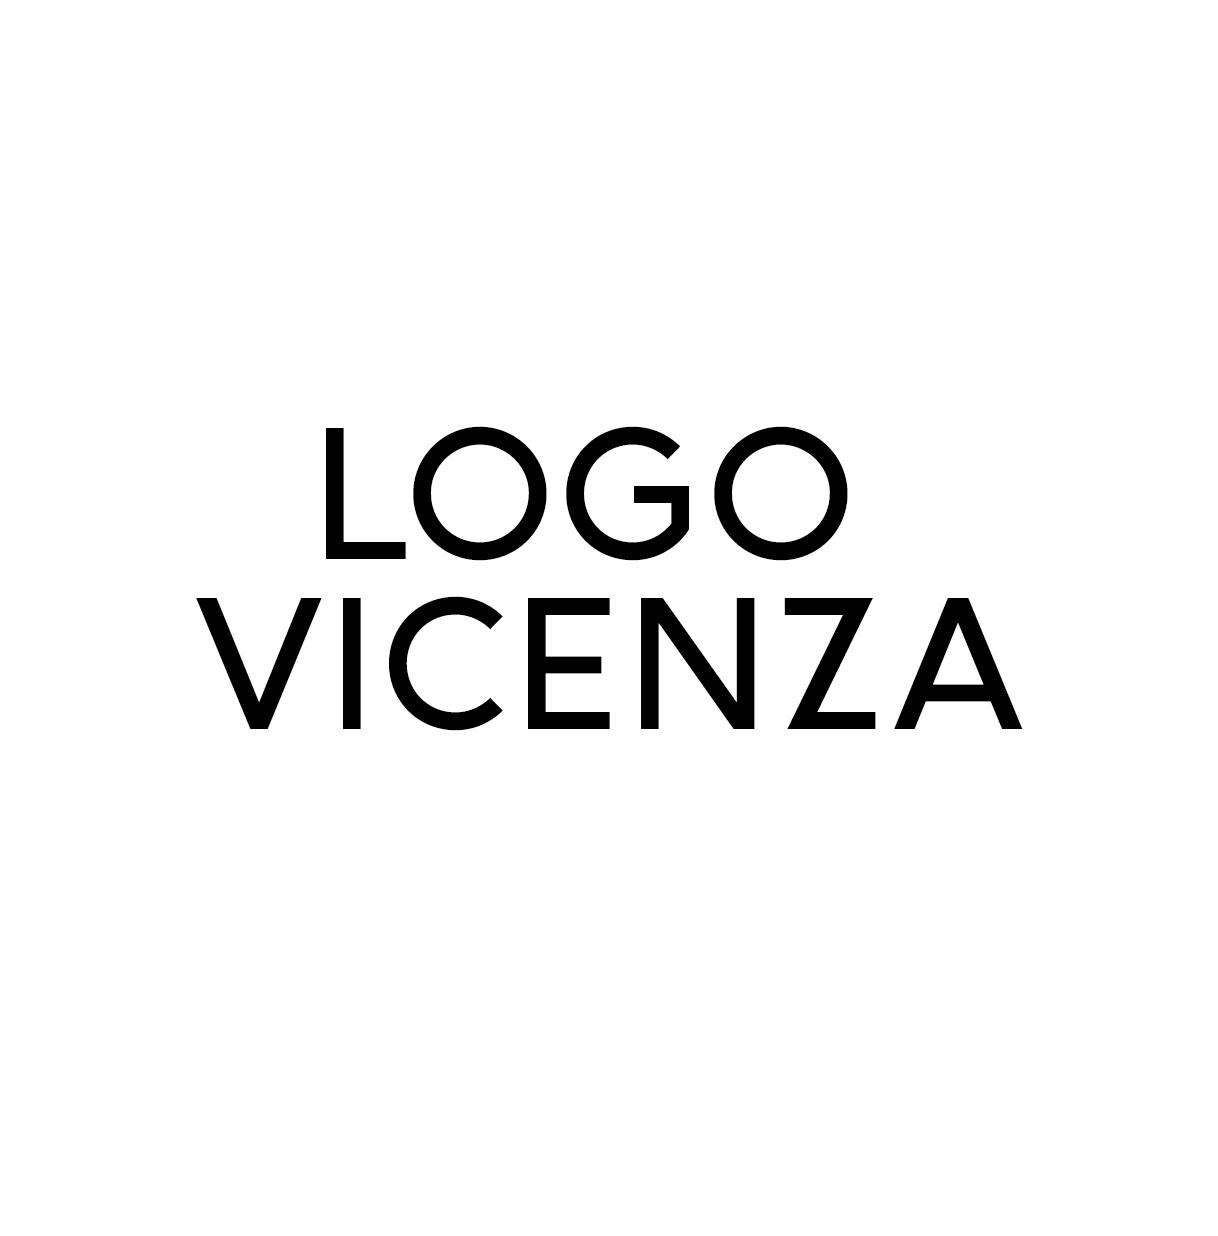 Vicenza Logo - Index of /wp-content/uploads/2018/07